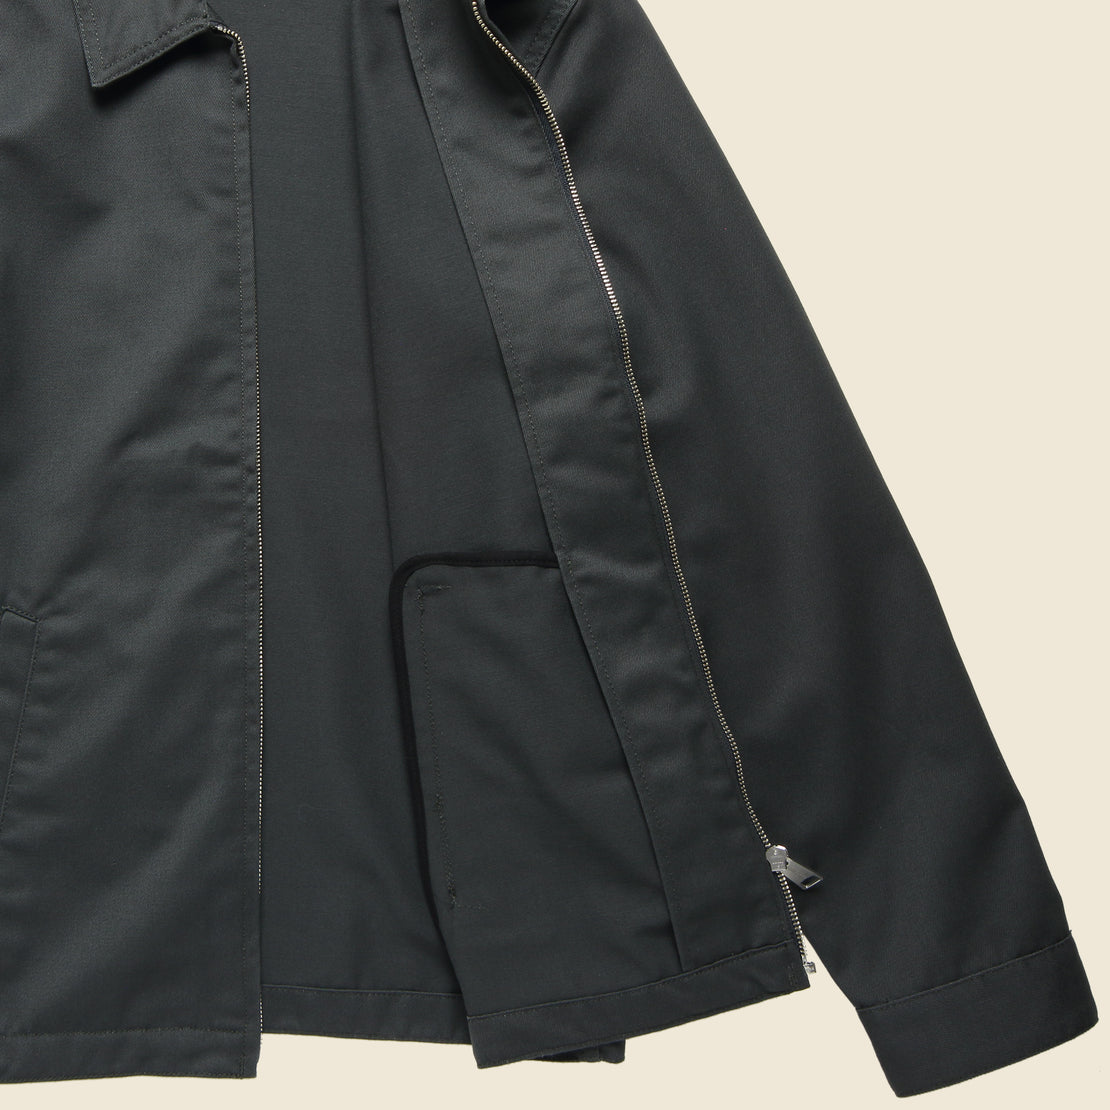 Modular Jacket - Asphalt - Carhartt WIP - STAG Provisions - Outerwear - Coat / Jacket